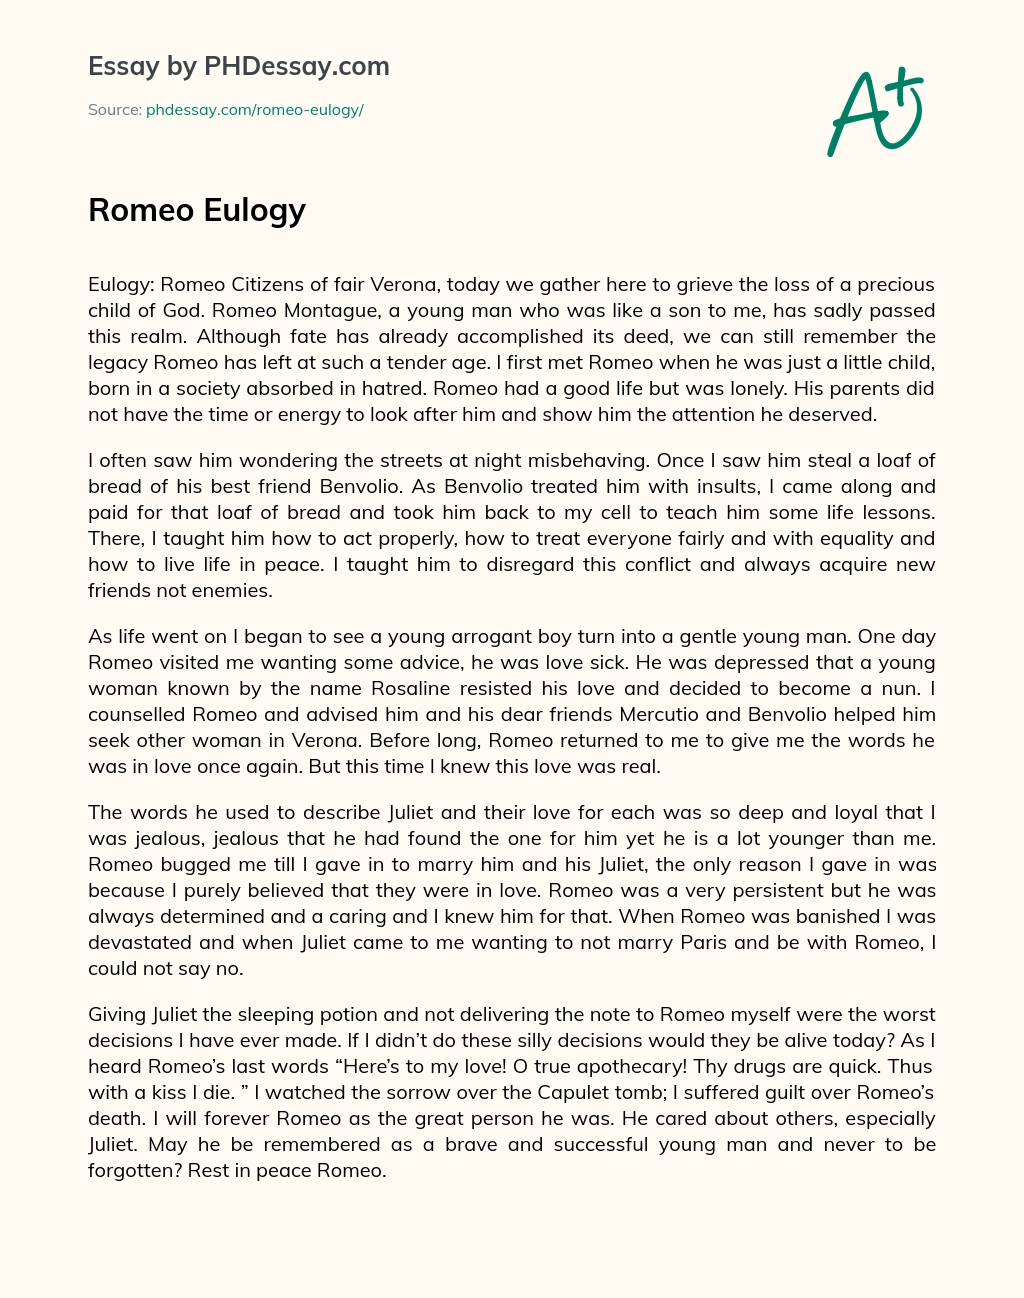 Romeo Eulogy essay